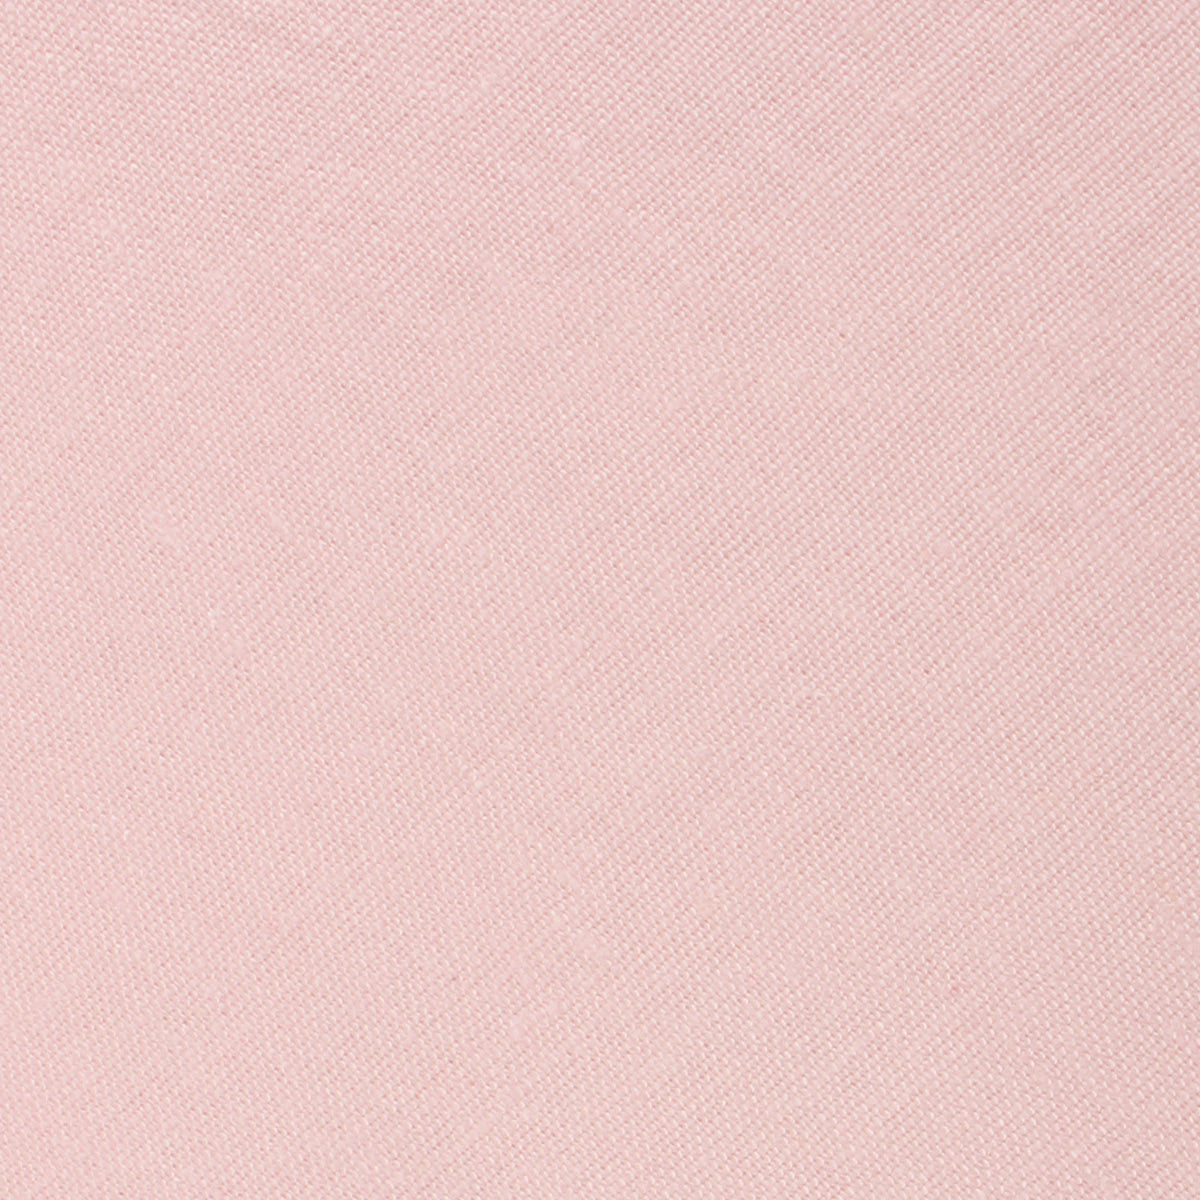 Blush Petal Pink Linen Pocket Square Fabric